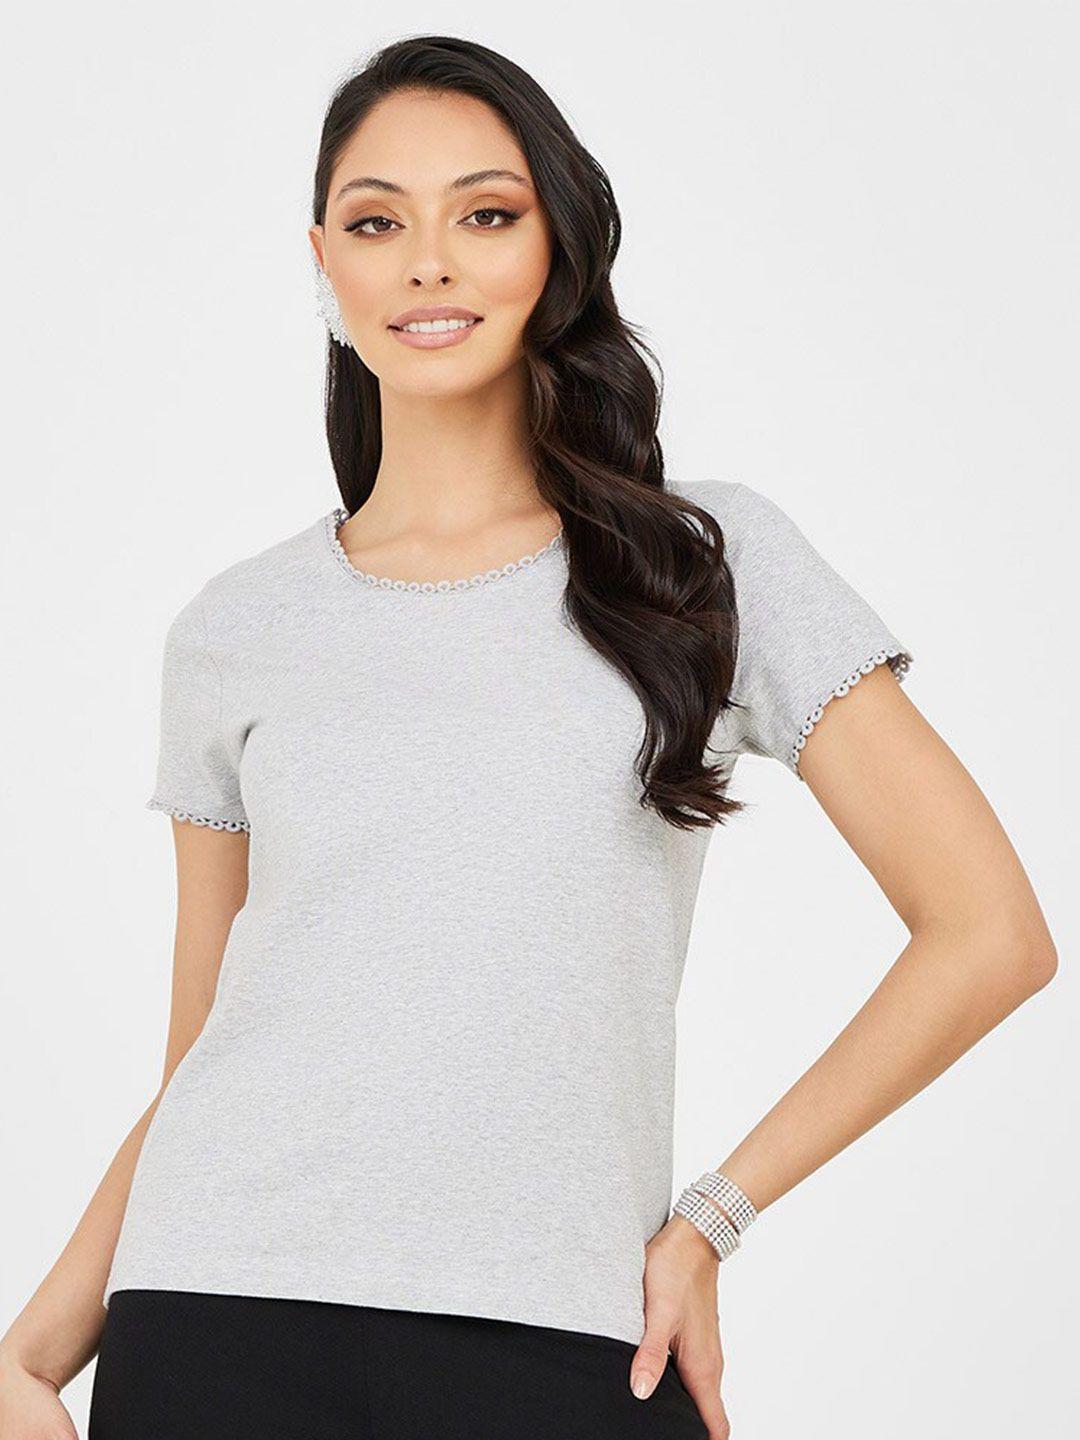 styli-women-grey-slim-fit-t-shirt